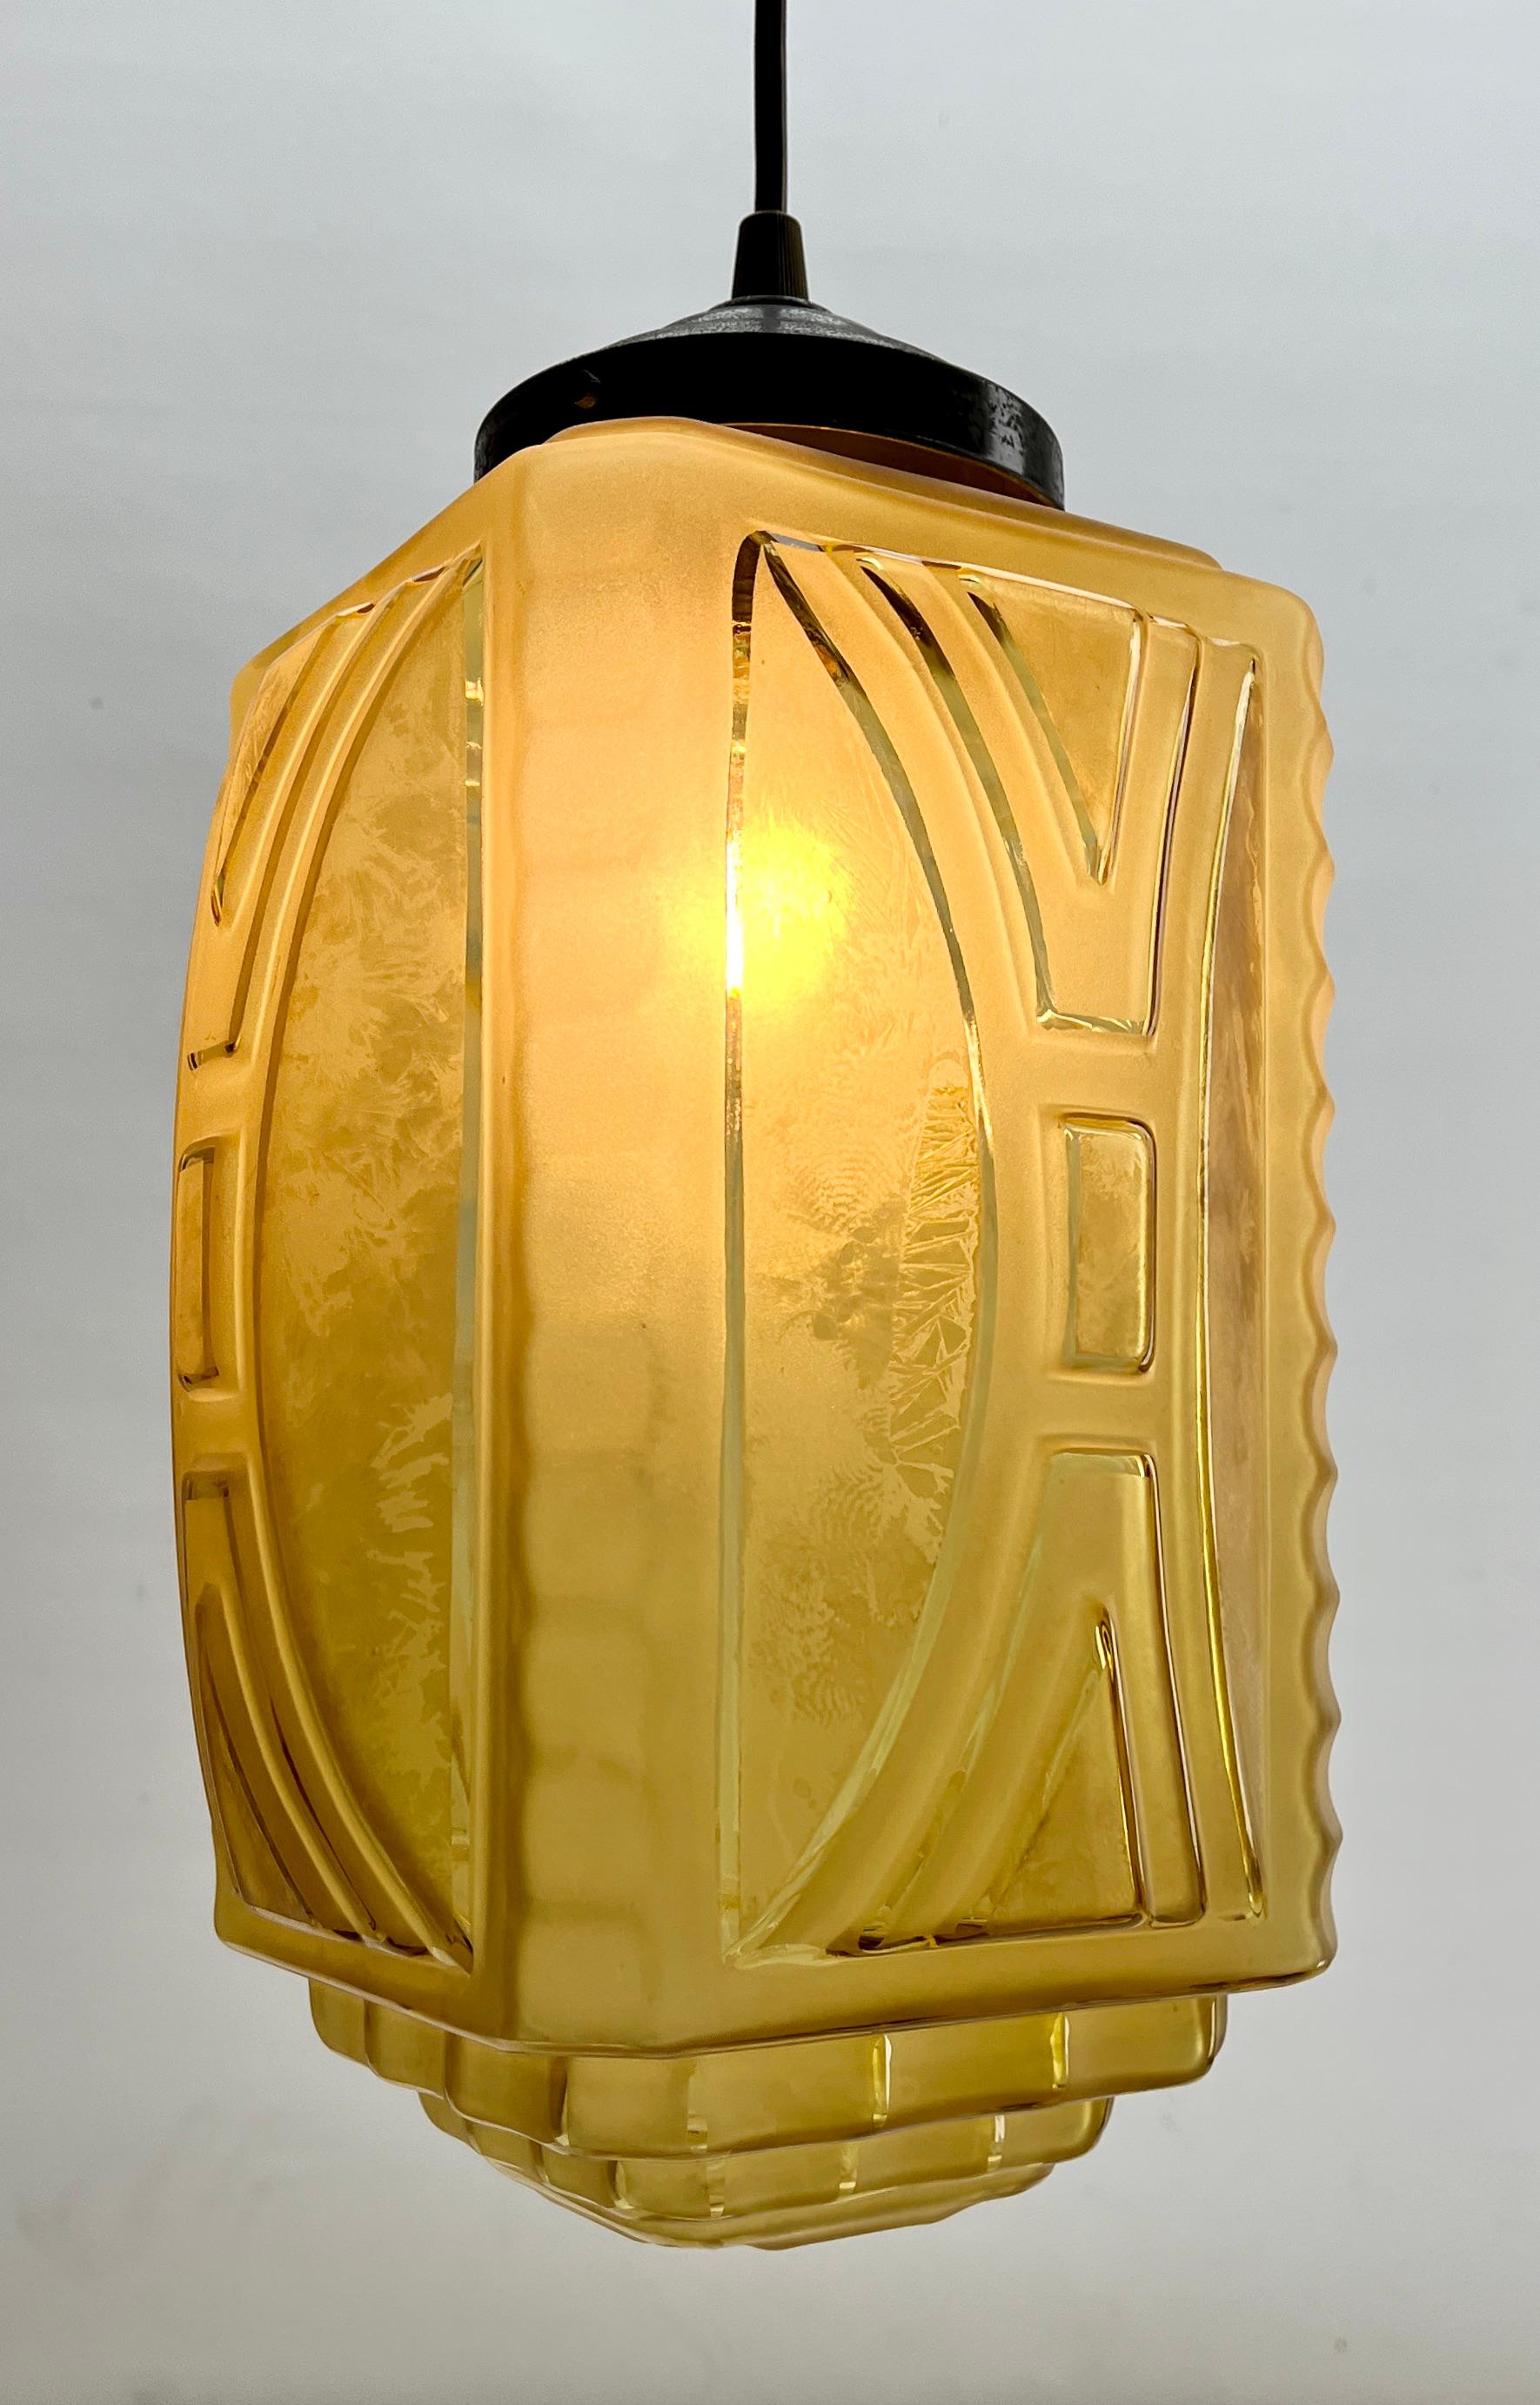 Art Glass Art Deco Ceiling Lamp, Belgium Glass Shade Scailmont, 1930s For Sale